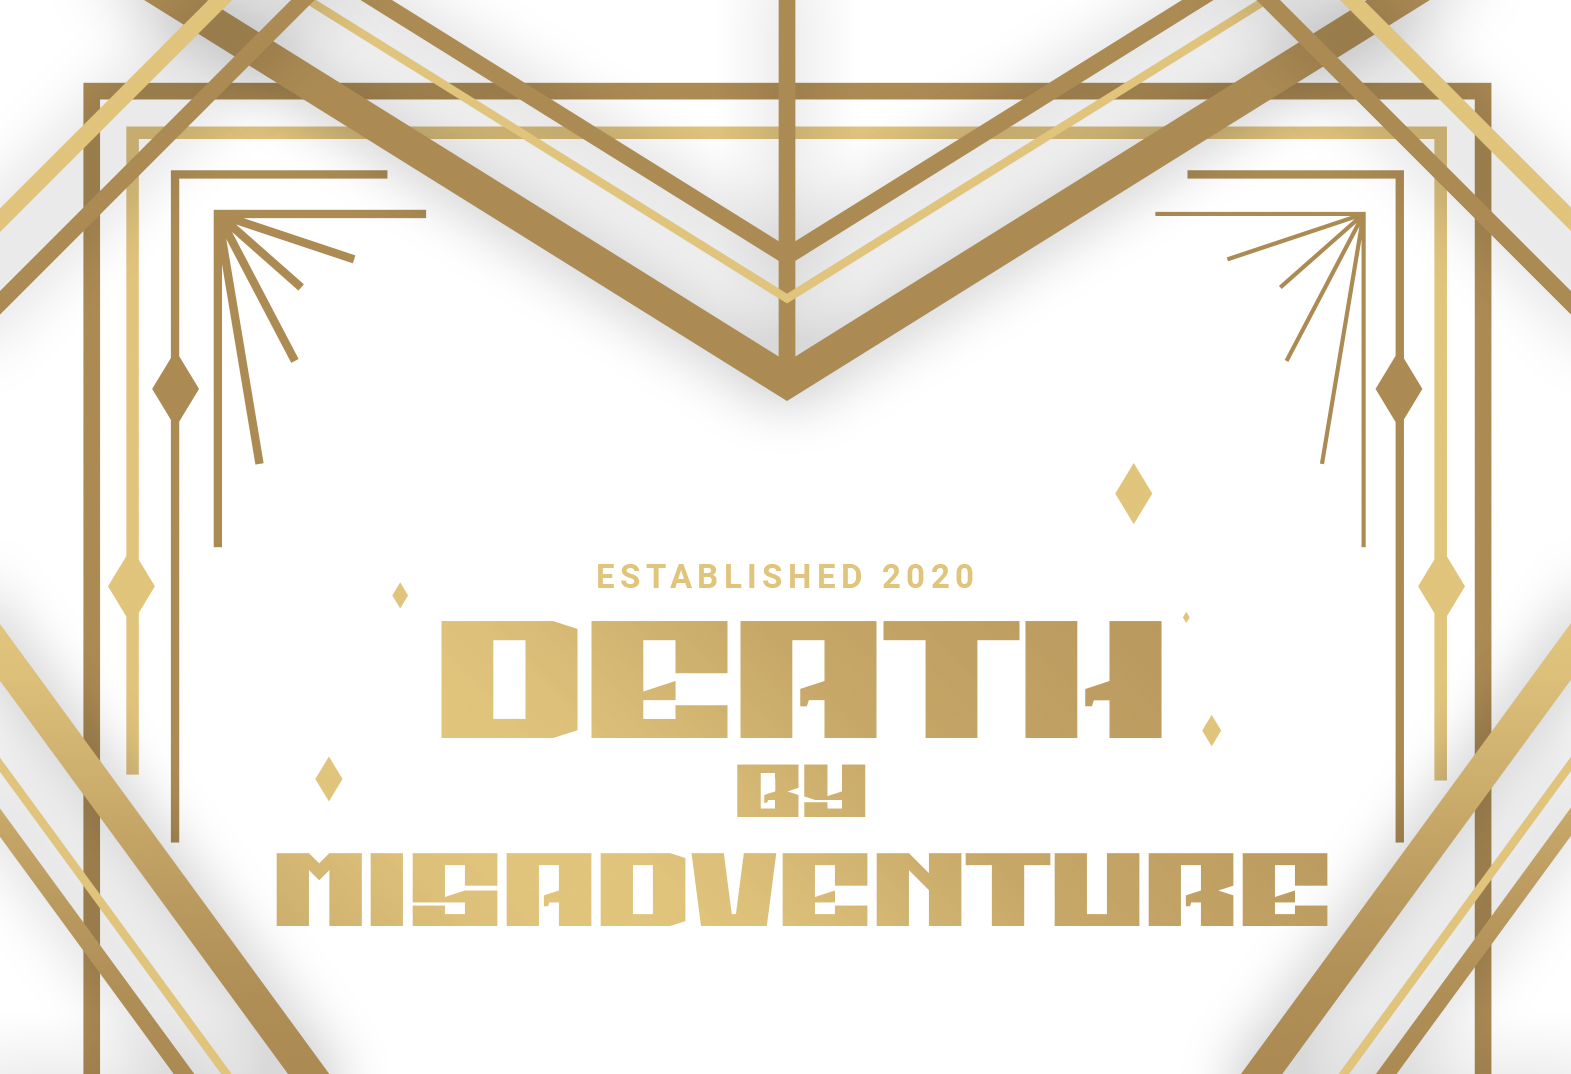 Death by Misadventure, LLC